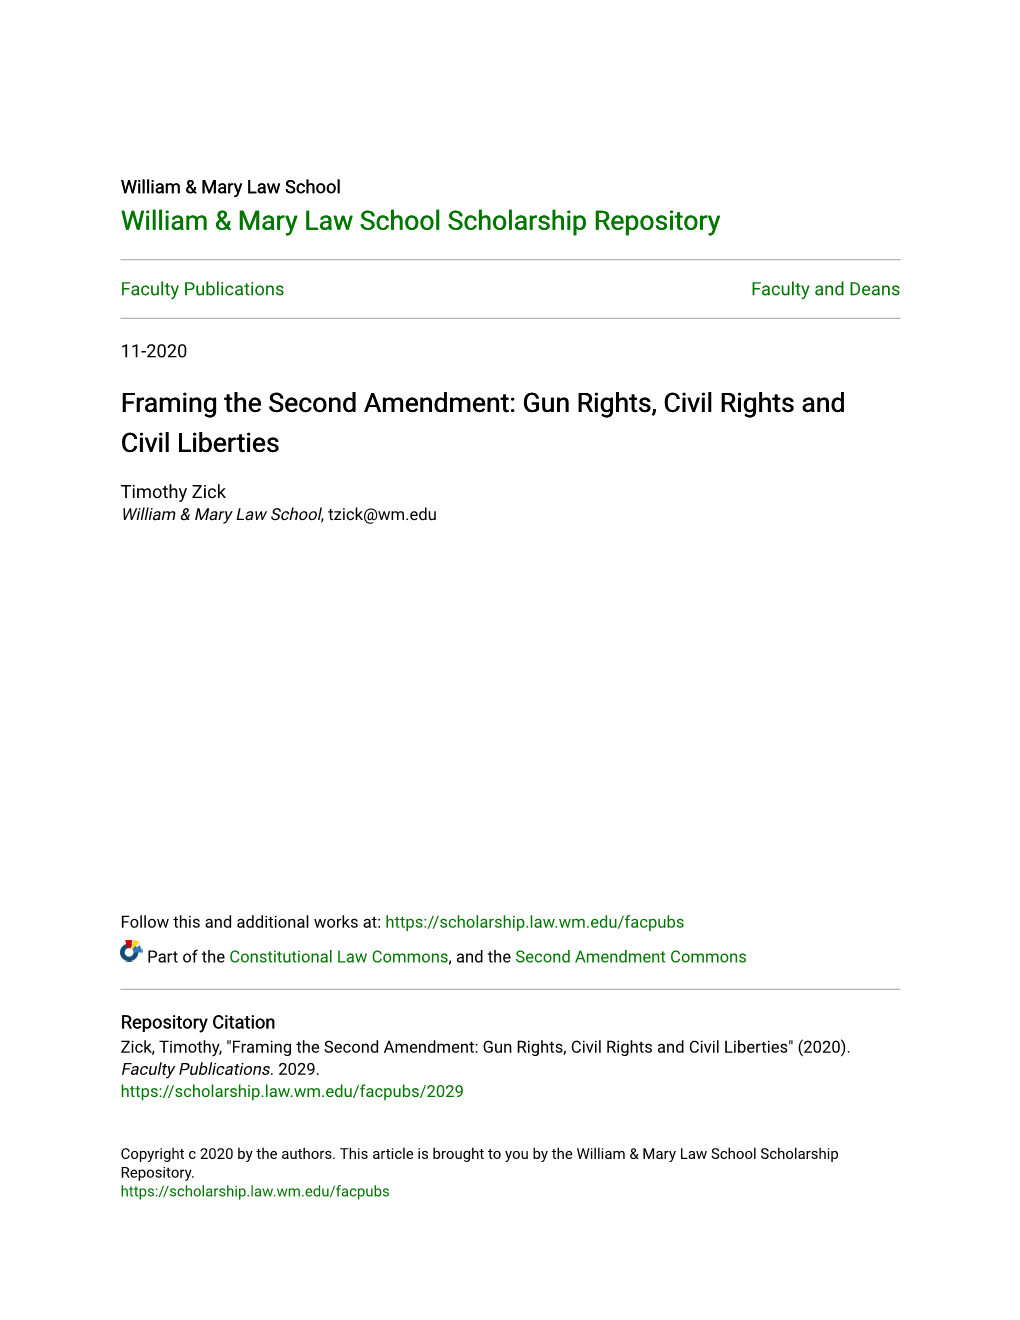 Framing the Second Amendment: Gun Rights, Civil Rights and Civil Liberties